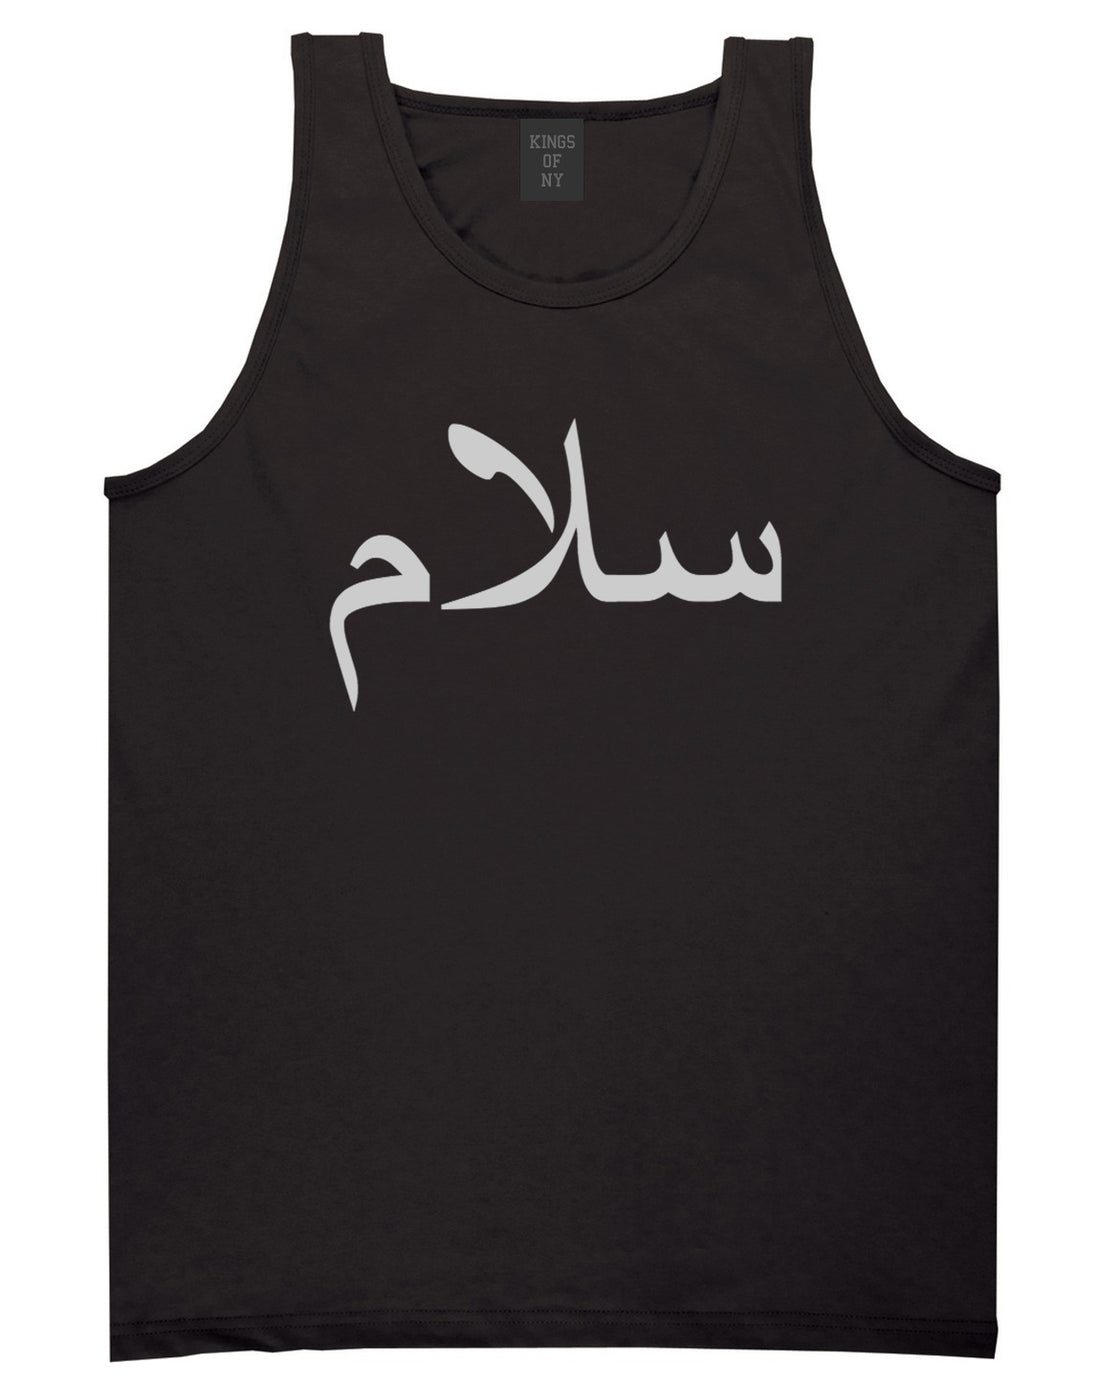 Arabic Peace Salam Black Tank Top Shirt by Kings Of NY